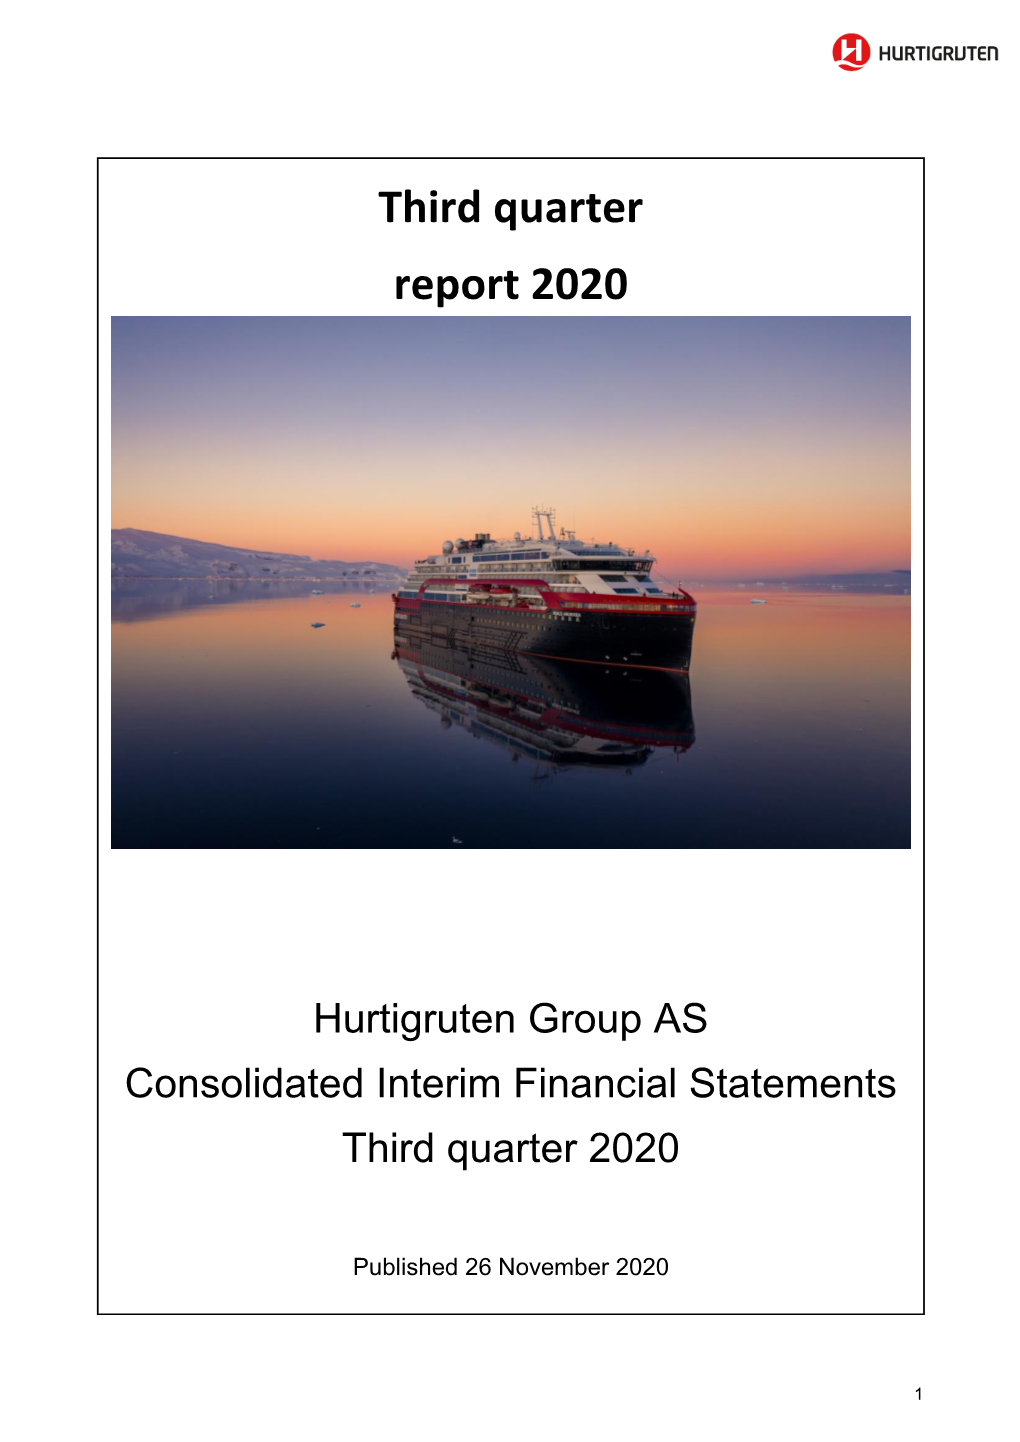 Third Quarter Report 2020